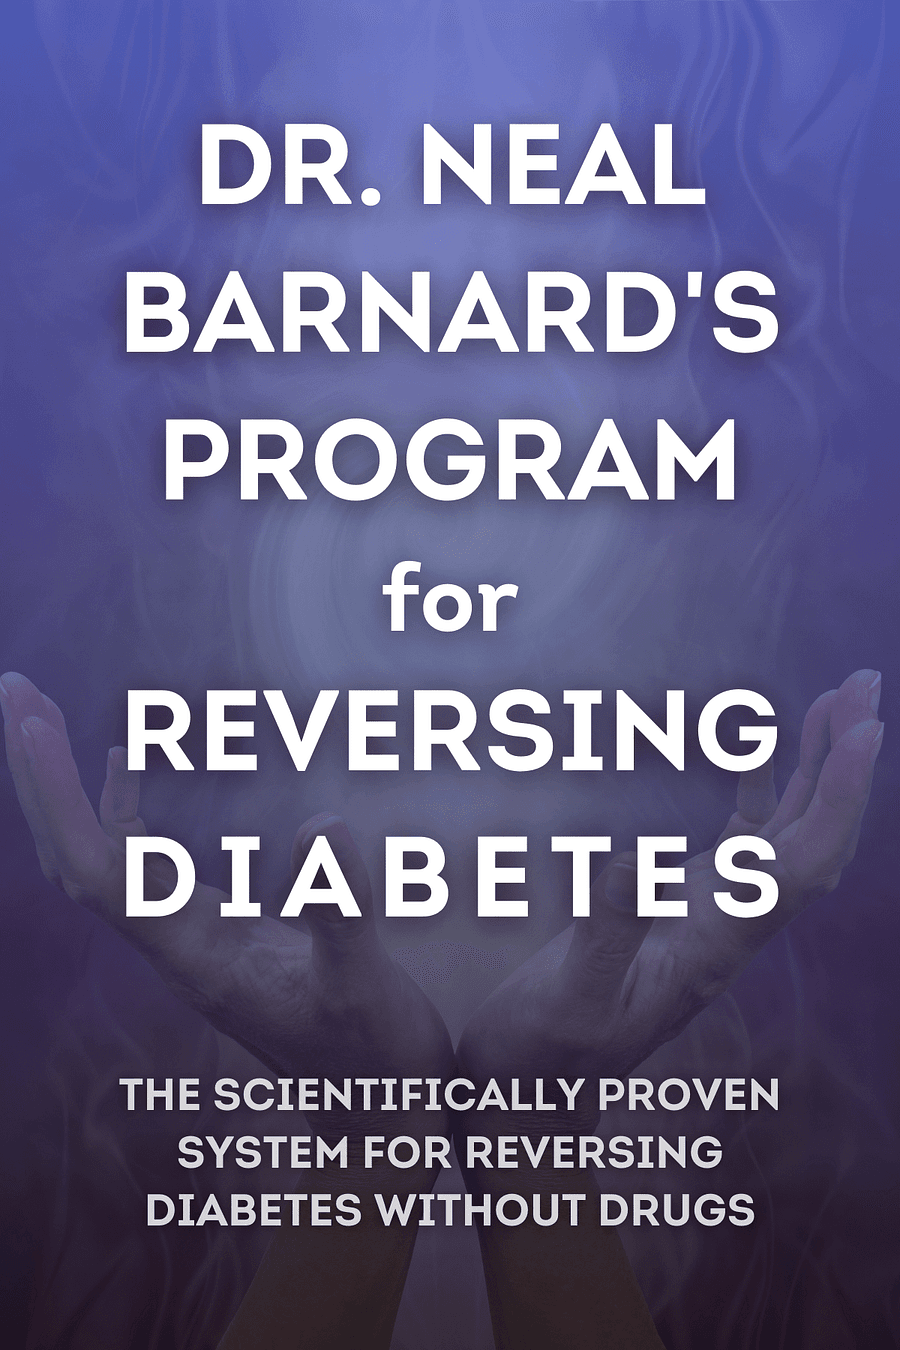 Dr. Neal Barnard's Program for Reversing Diabetes by Dr. Neal Barnard MD FACC - Book Summary